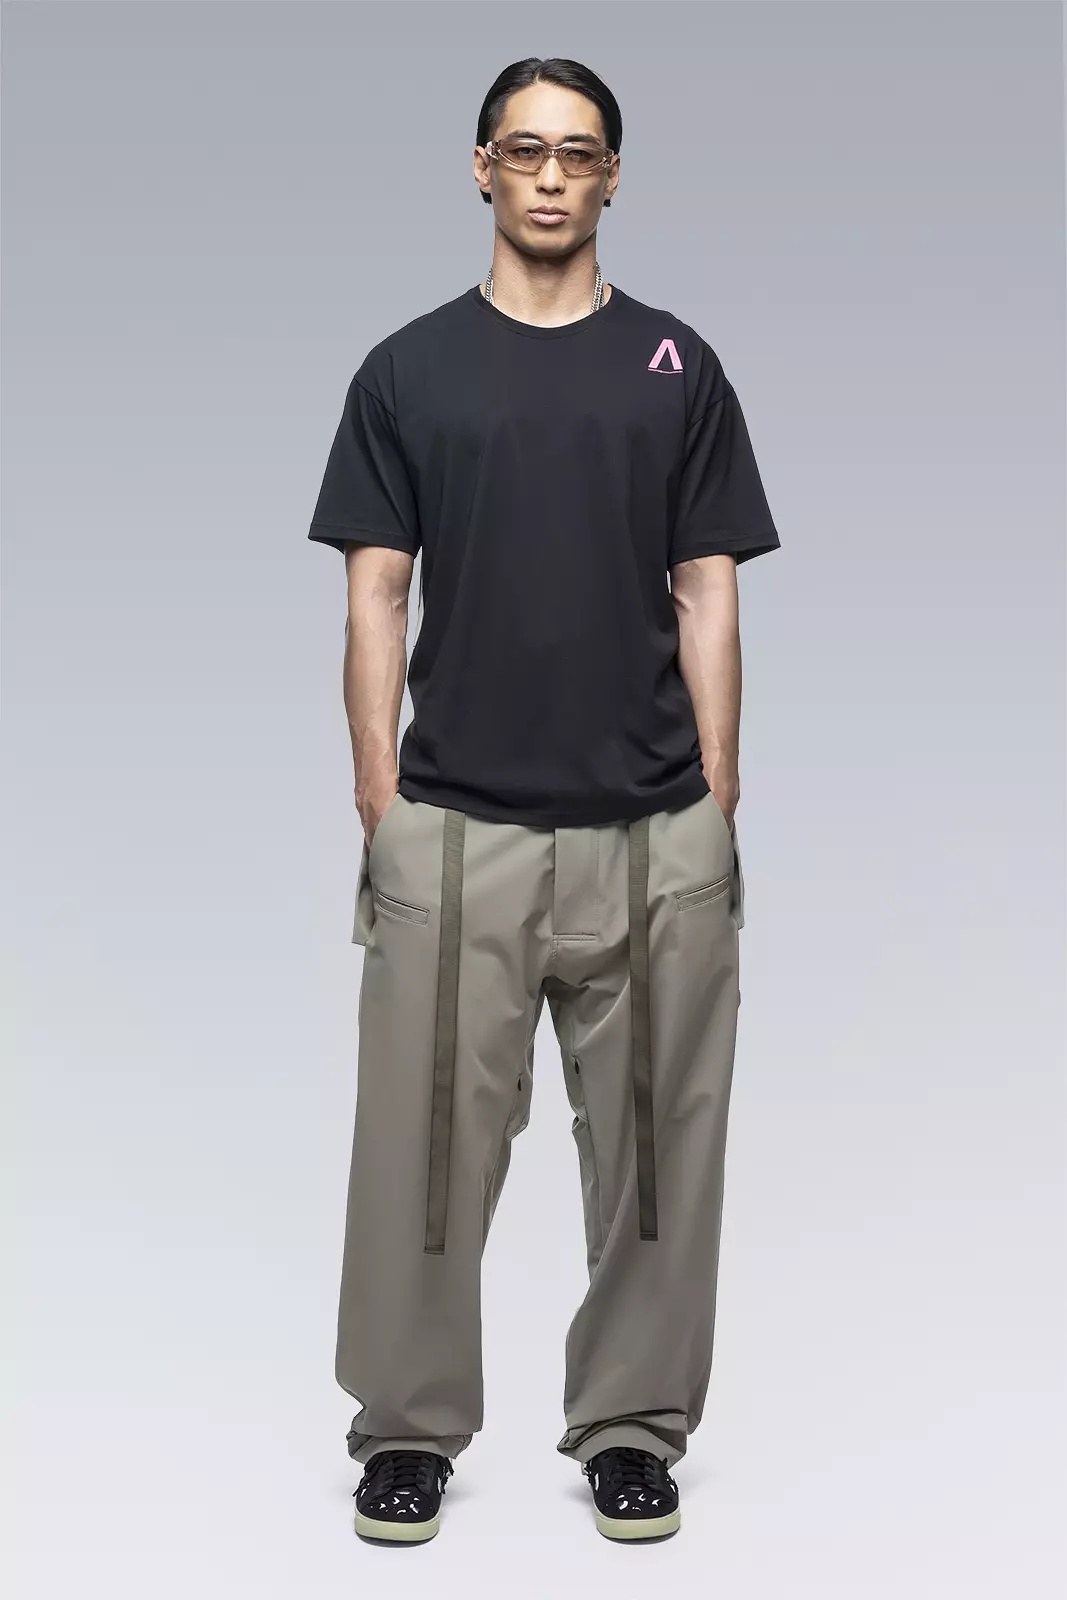 S24-PR-C Pima Cotton Short Sleeve T-shirt Black - 8